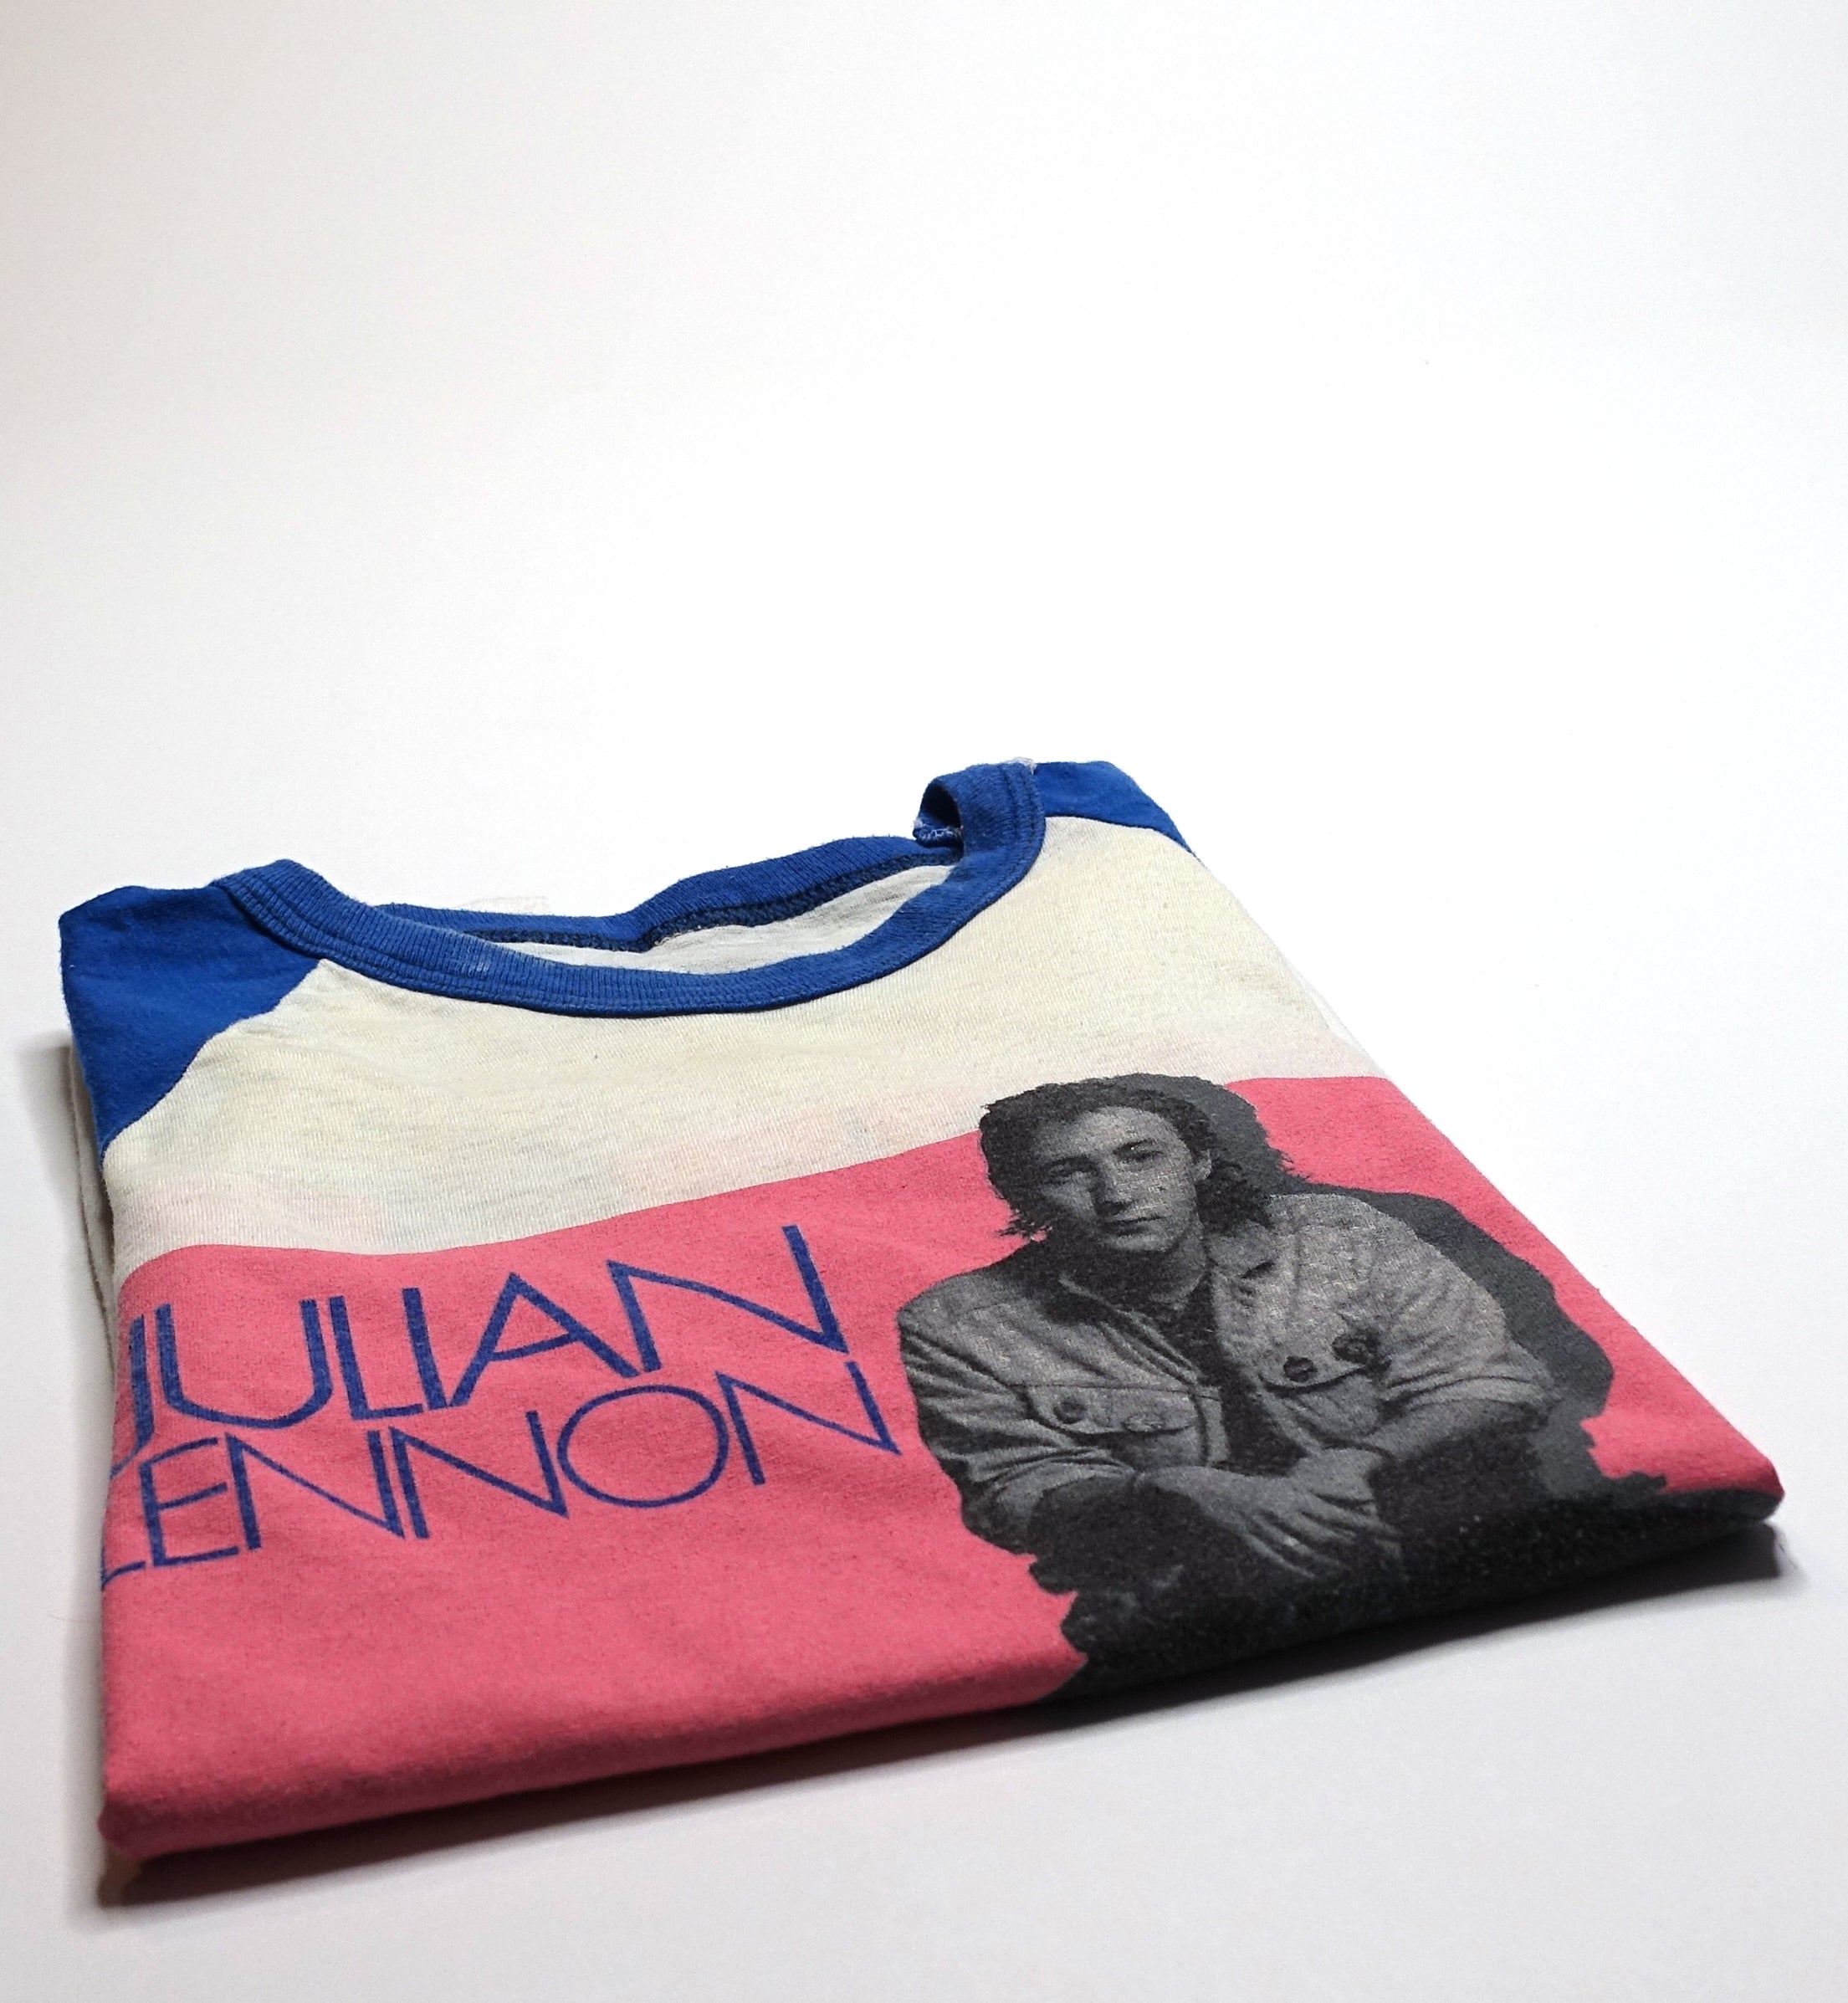 Julian Lennon ‎– Valotte Live in 1985 Tour Raglan Shirt Size Medium